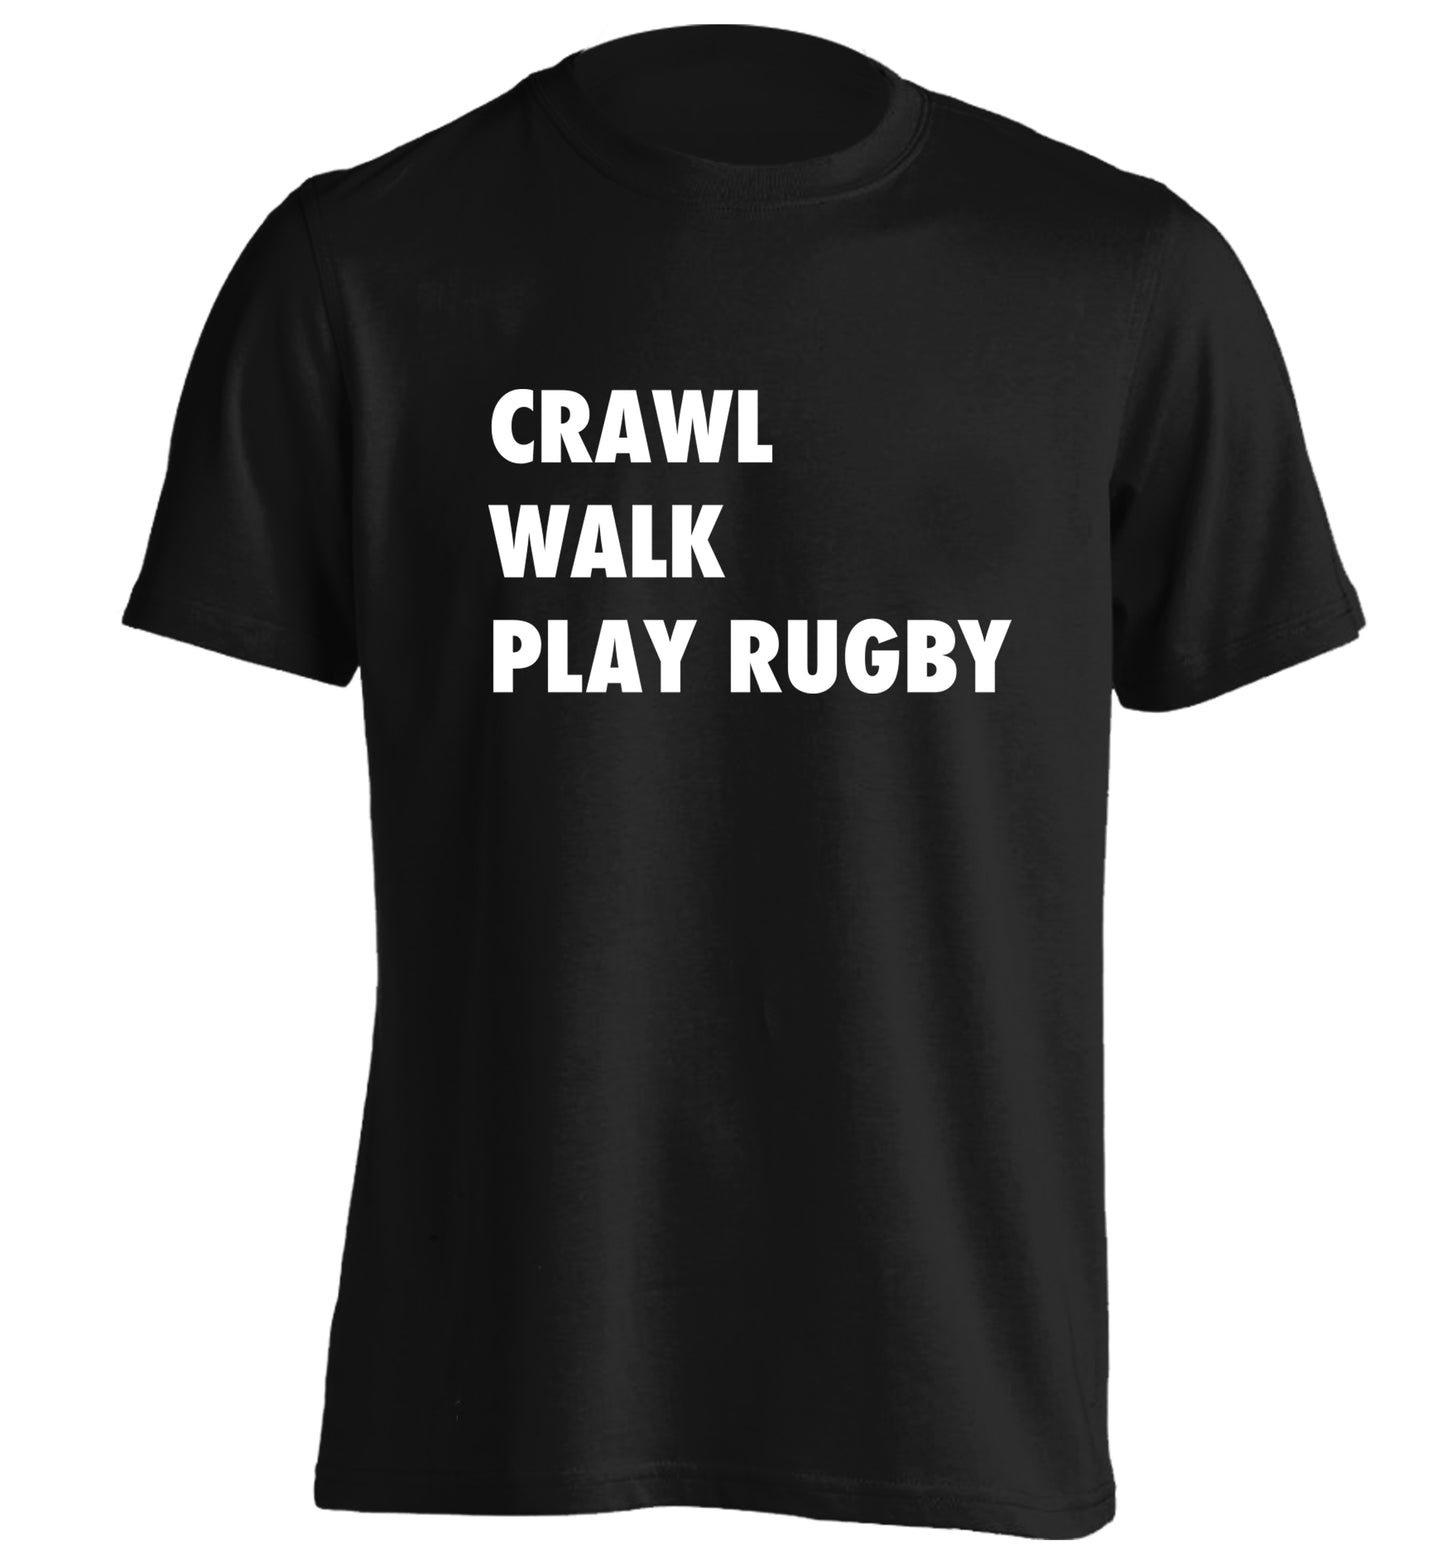 Eat, sleep, play rugby adults unisex black Tshirt 2XL